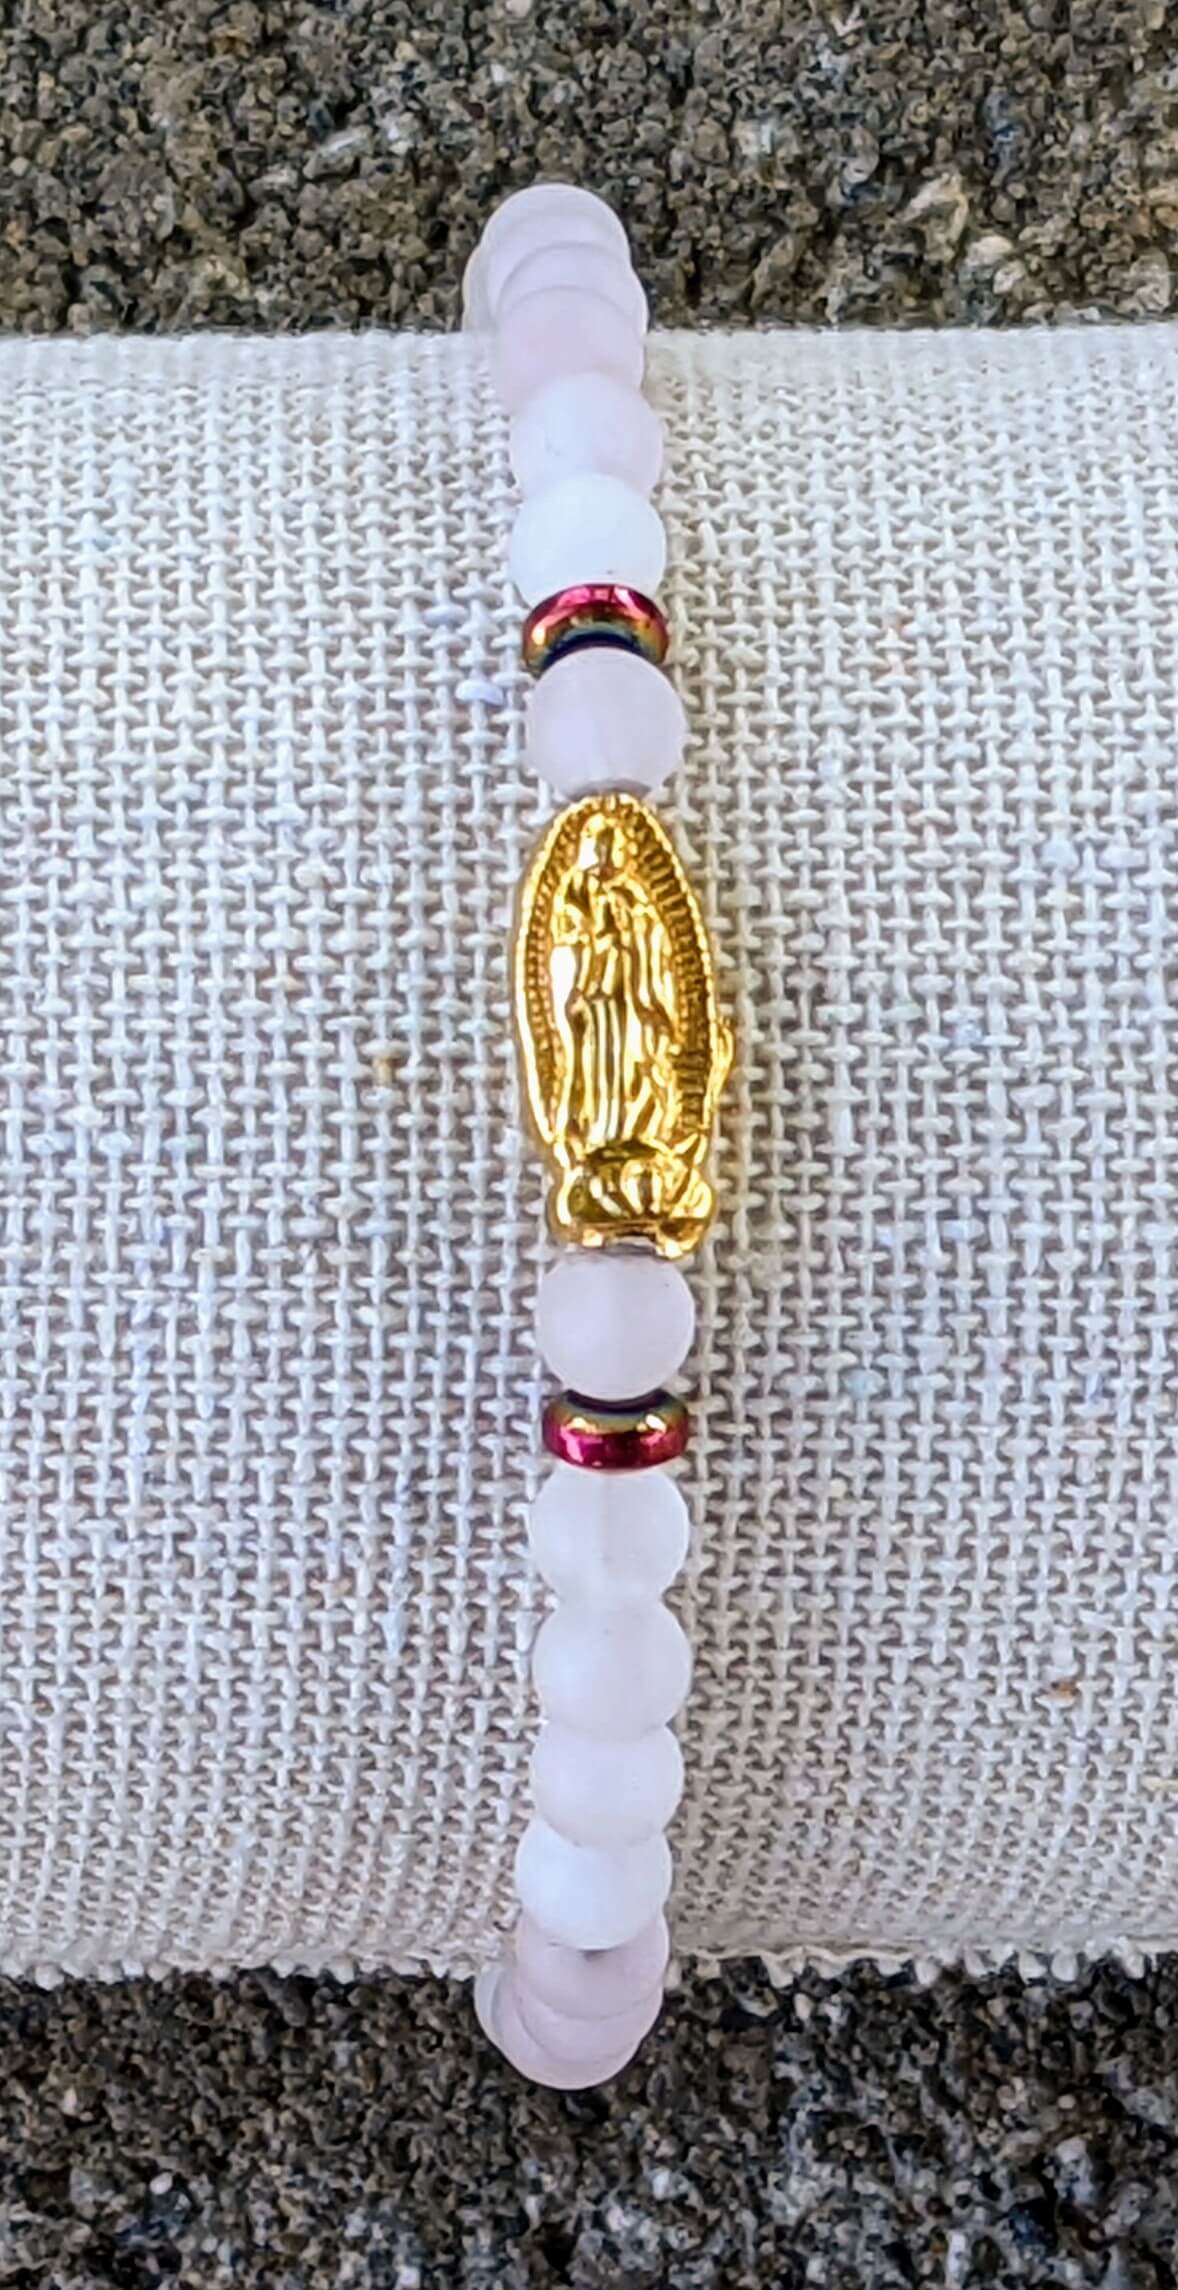 Rose Quartz Bracelet with Virgin Mary & Hematite Spacers